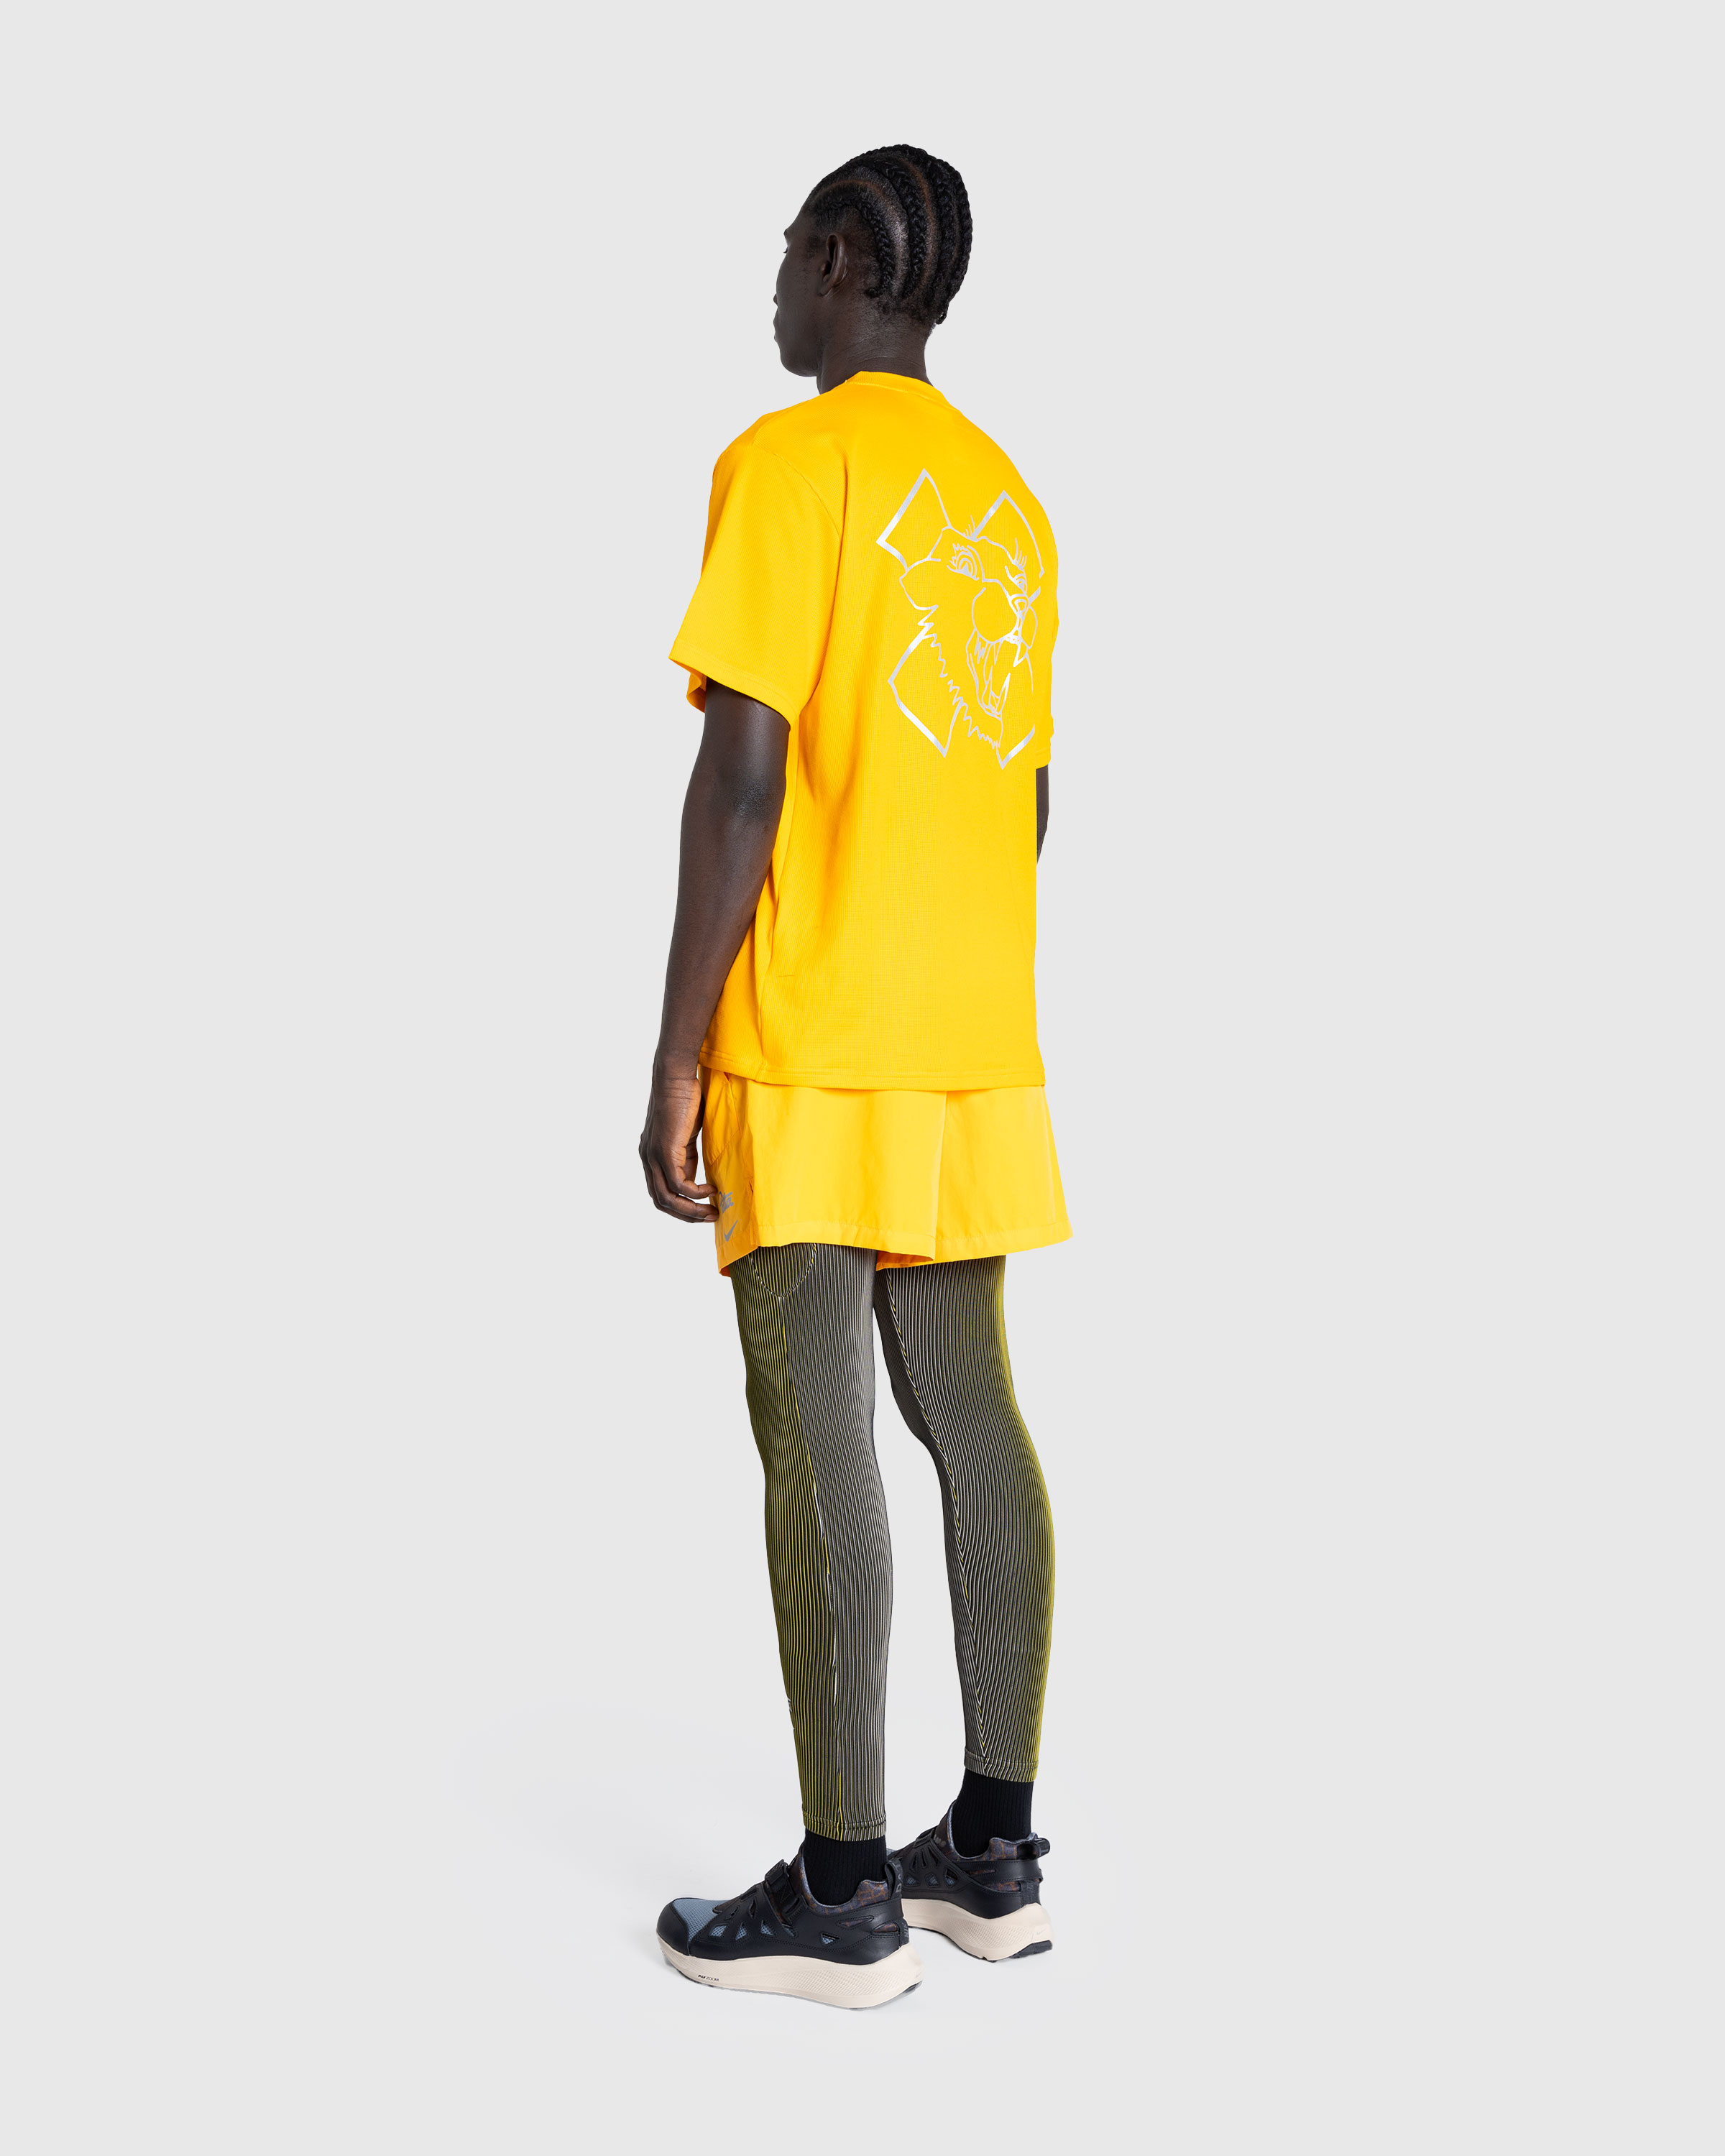 Nike x Patta – Men's Shorts Sundial - Active Shorts - Yellow - Image 4